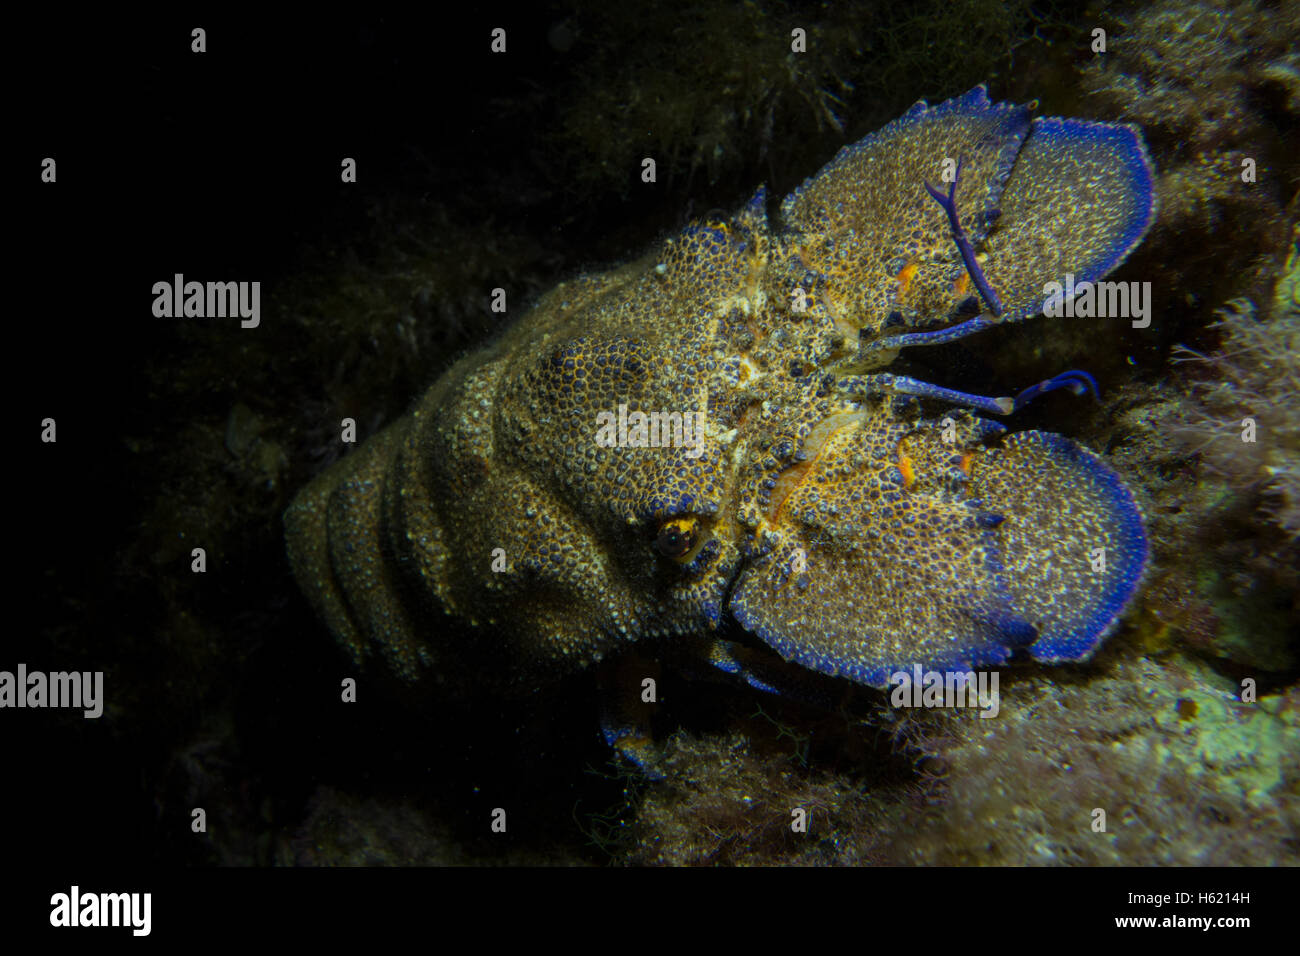 Mediterranean slipper lobster, Scyllarides latus, from Malta, Mediterranean Sea. Stock Photo